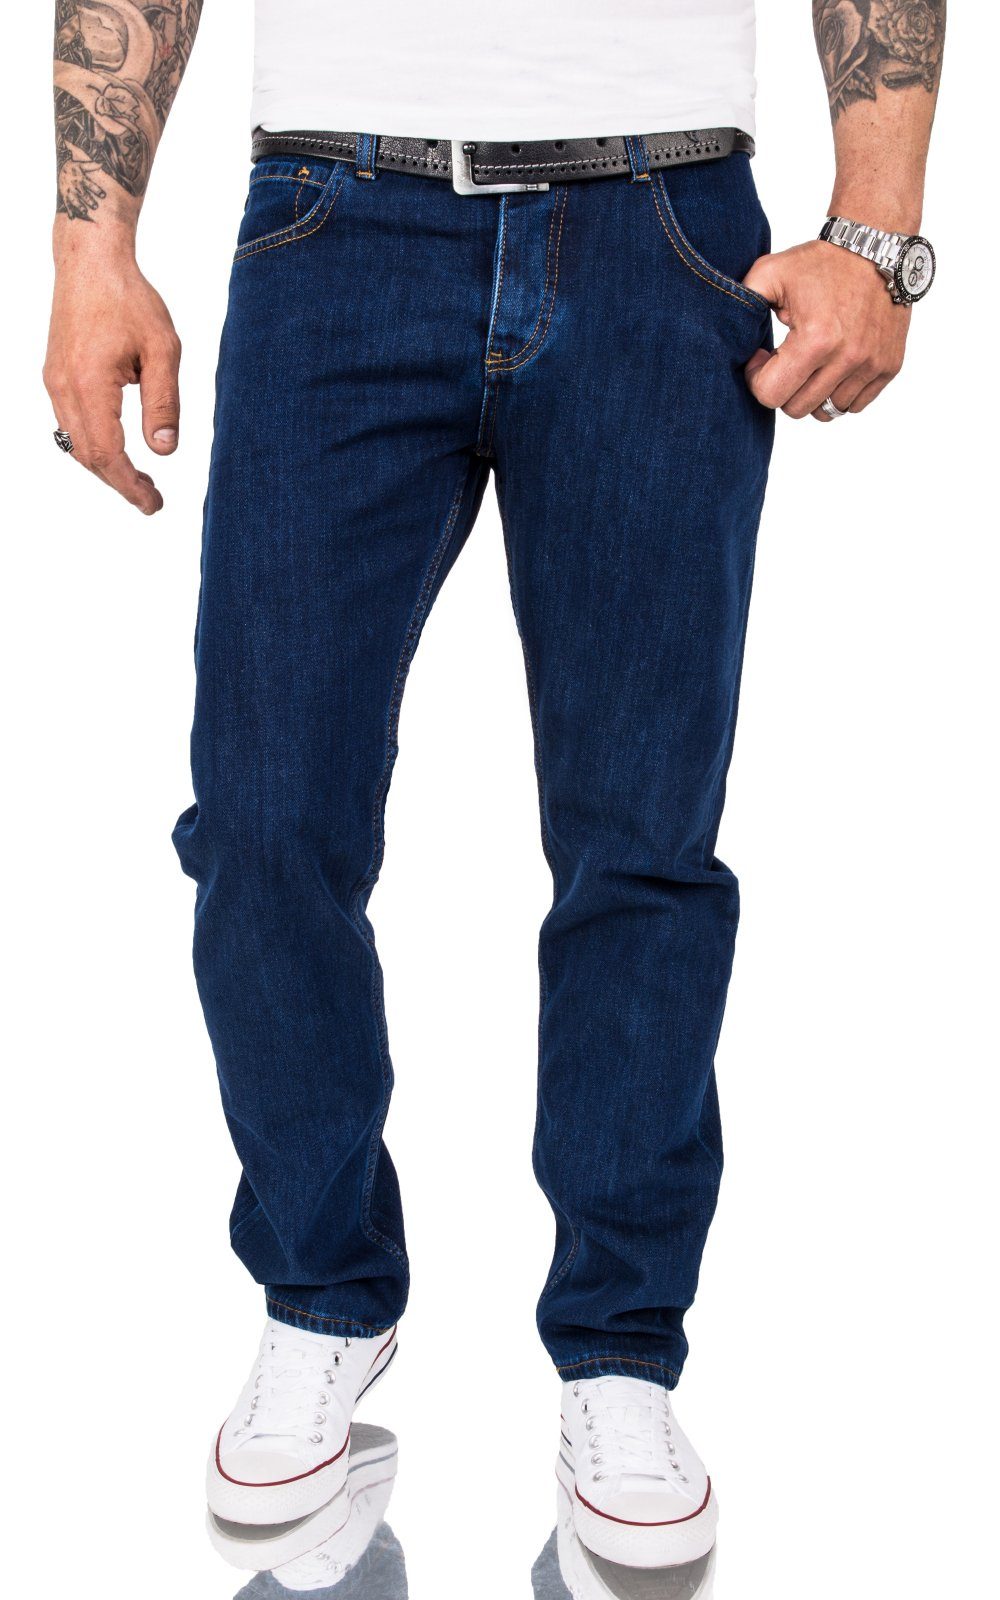 Straight-Jeans RC-3100 Rinsedwashed Jeans Herren Dunkelblau Creek Rock